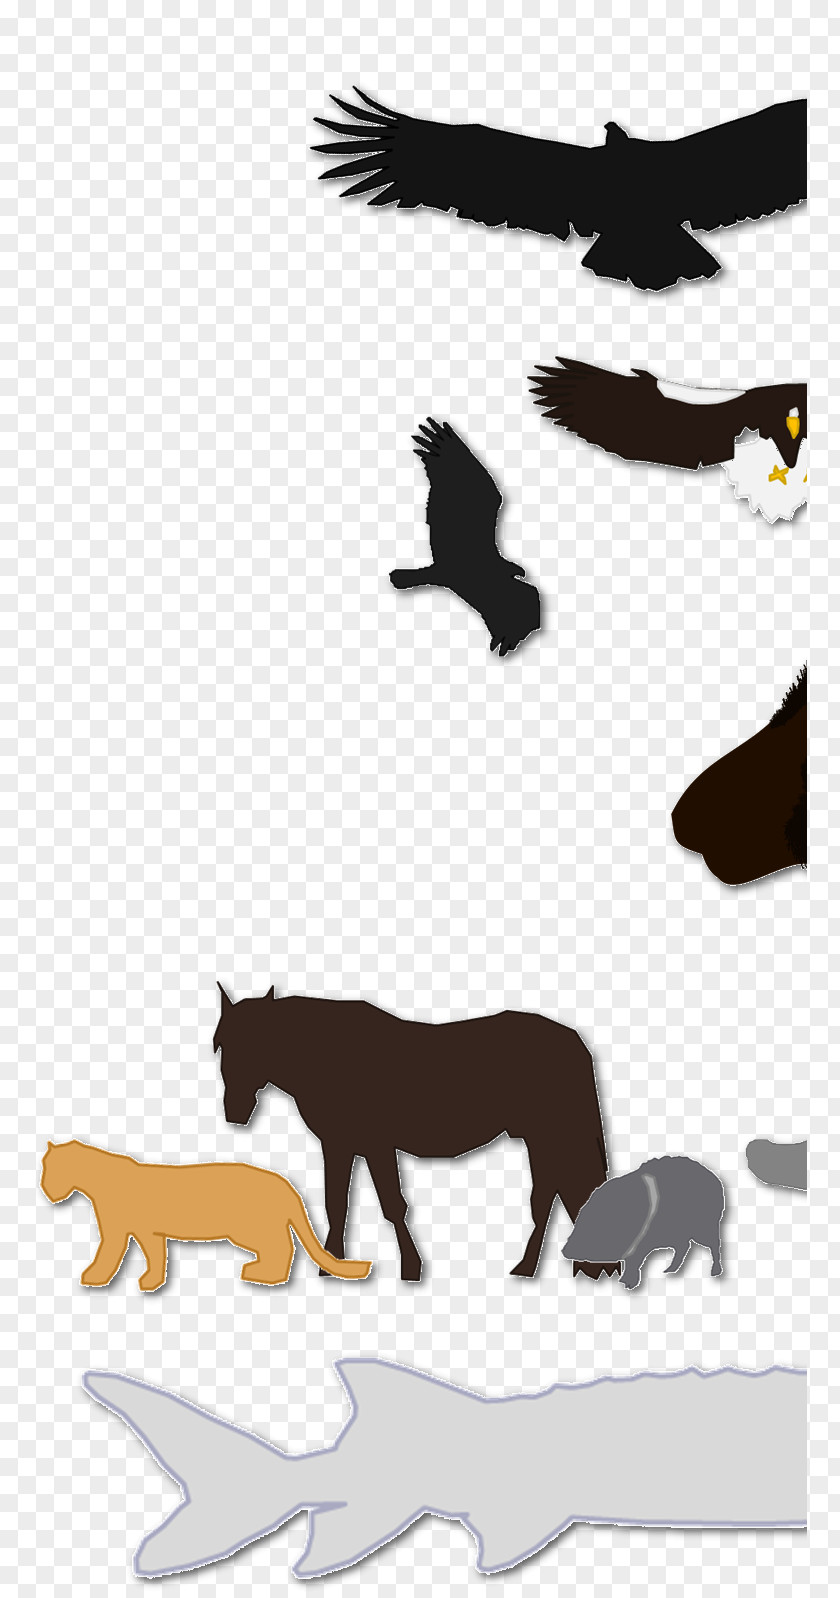 Juvenile Golden Eagle Vs Bald Canidae Mustang Digital Art Zoo Tycoon 2 Dog PNG